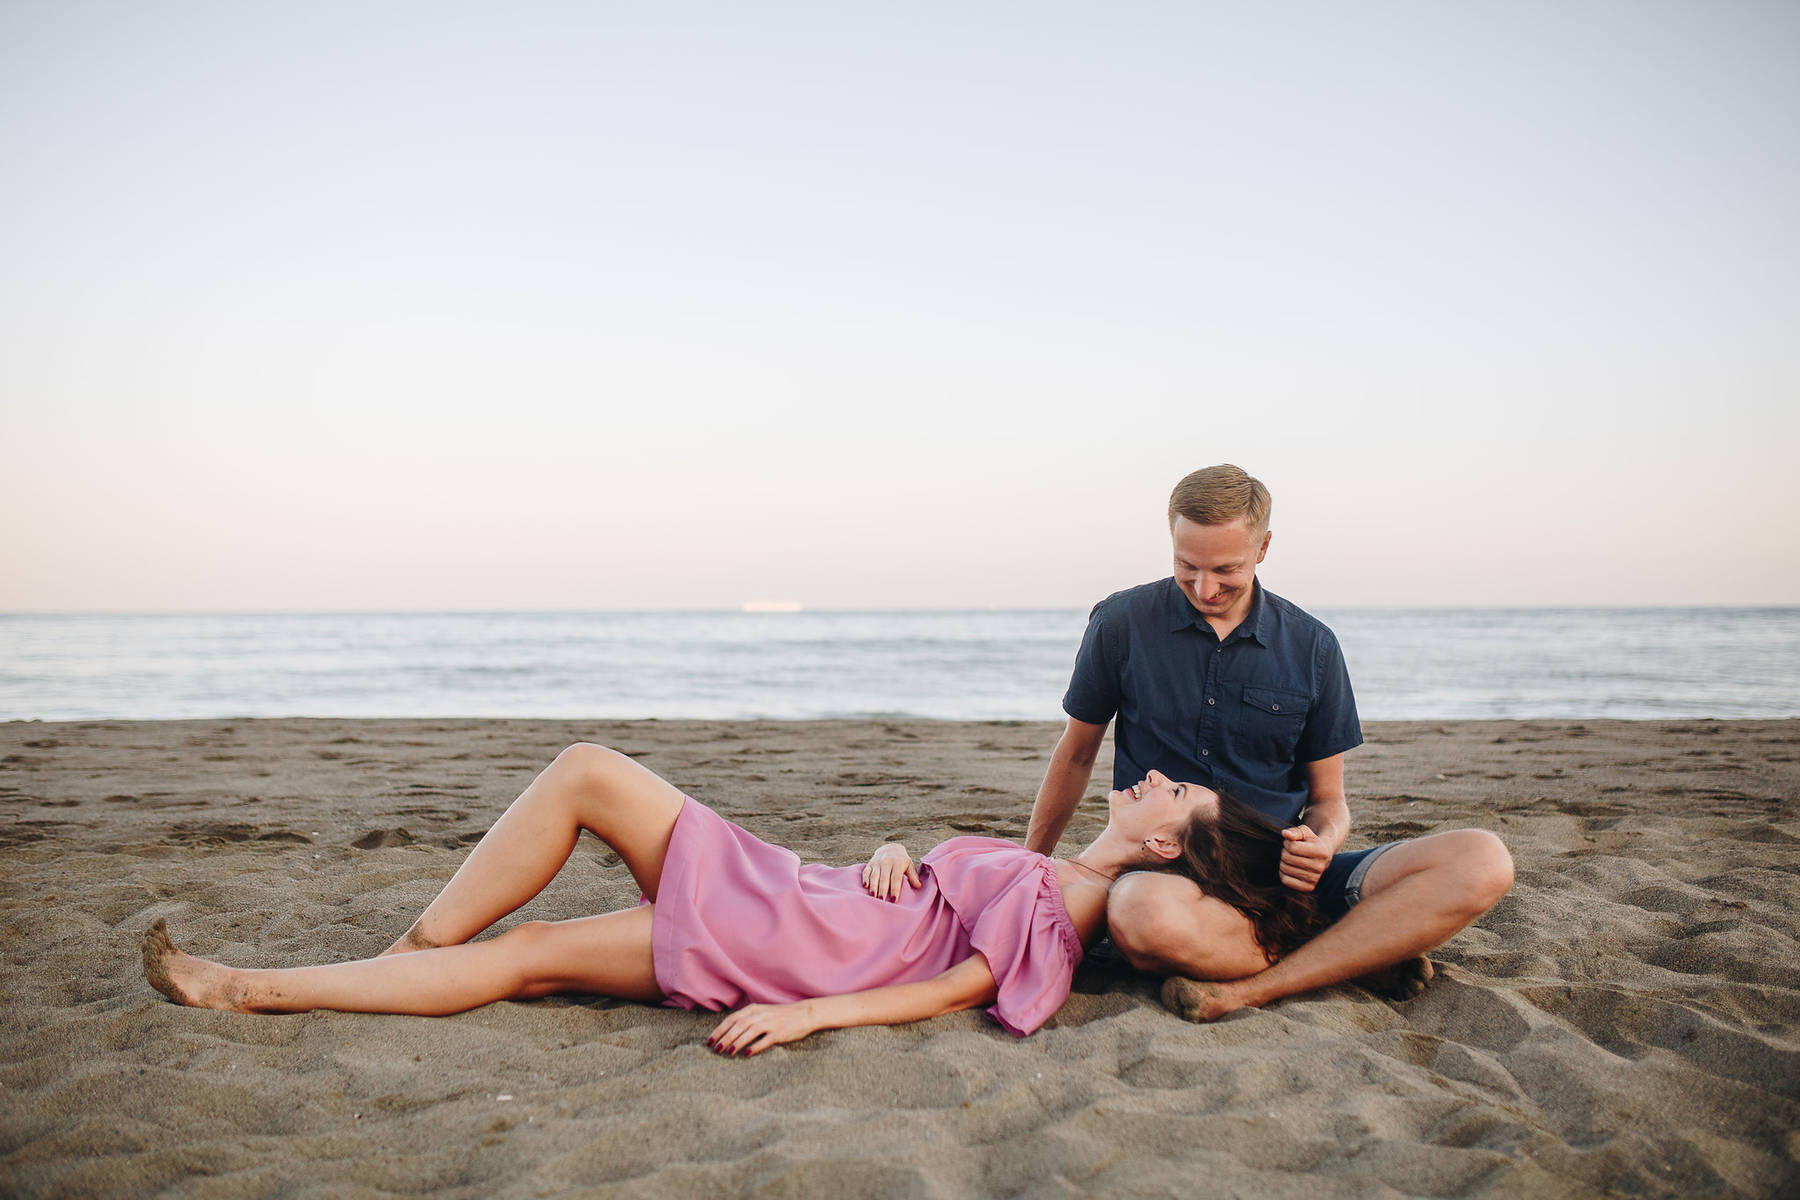 Love Story photo shoot on the beach of Torremolinos